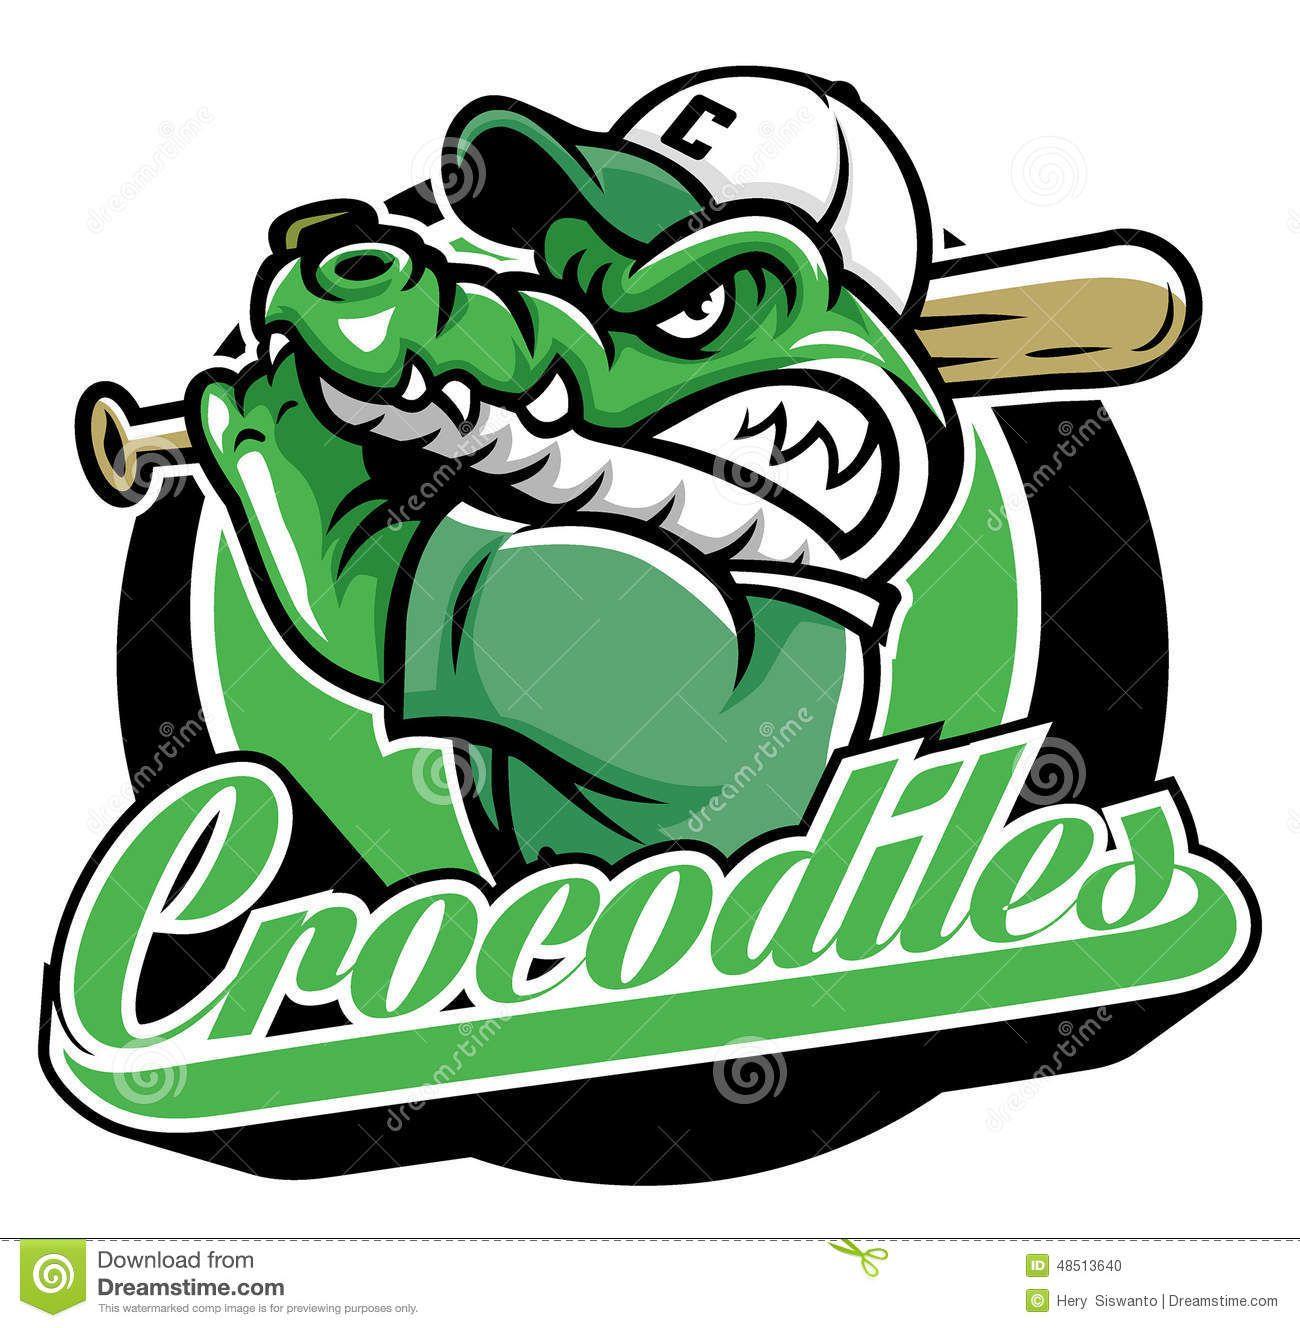 Crocodile Sports Logo - Pin by Tonya Clayton on Crocodiles & Gators | Logo design, Logos ...